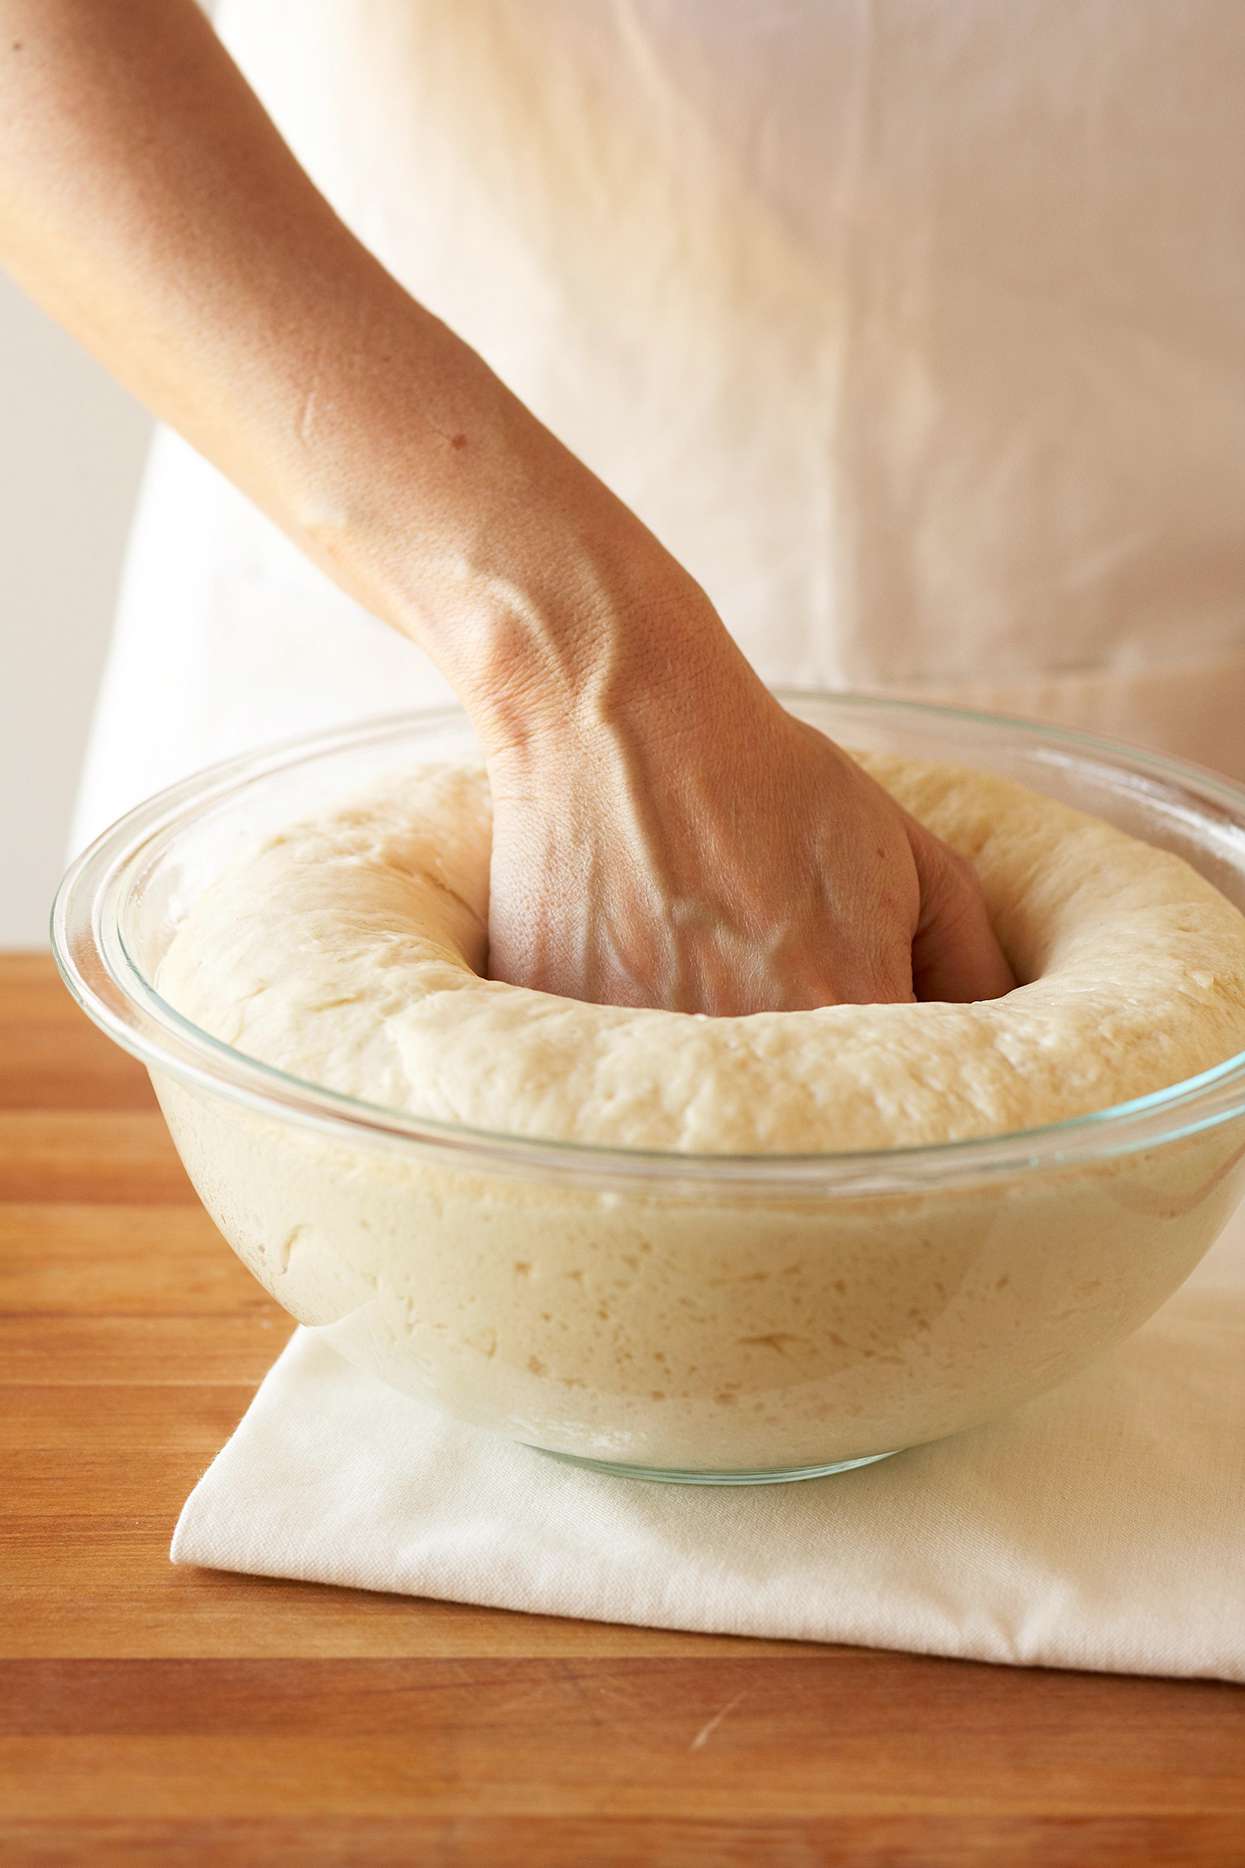 Punch down dough for cinnamon rolls